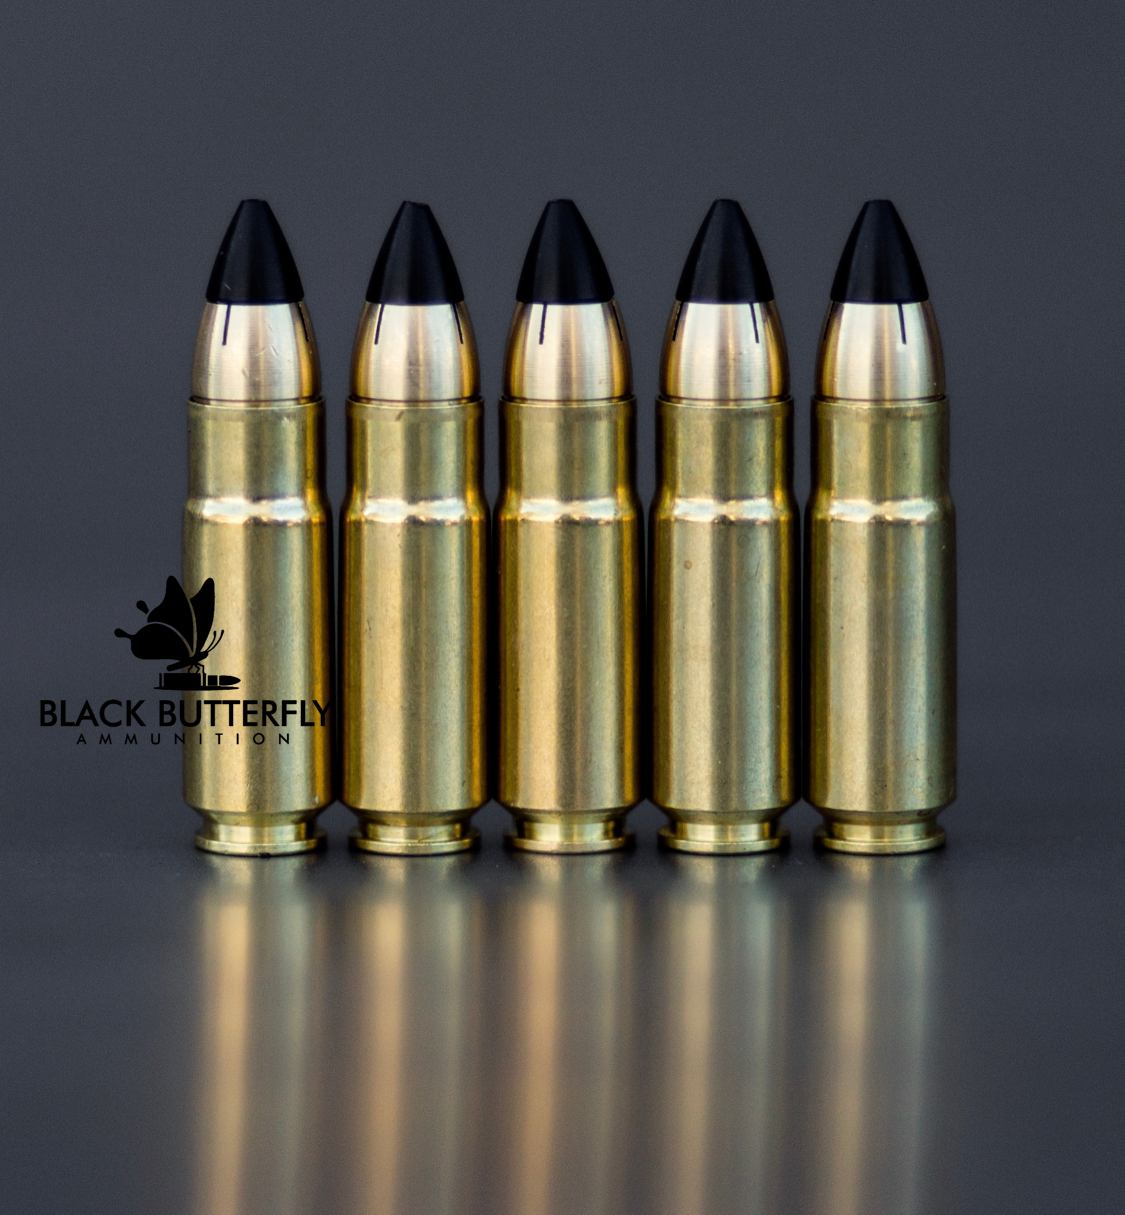 Black Butterfly Ammunition Premium, .458 SOCOM, 258 gr, 5 Rounds, Cutting Edge FB Raptor Brass (SAMPLE PACK)